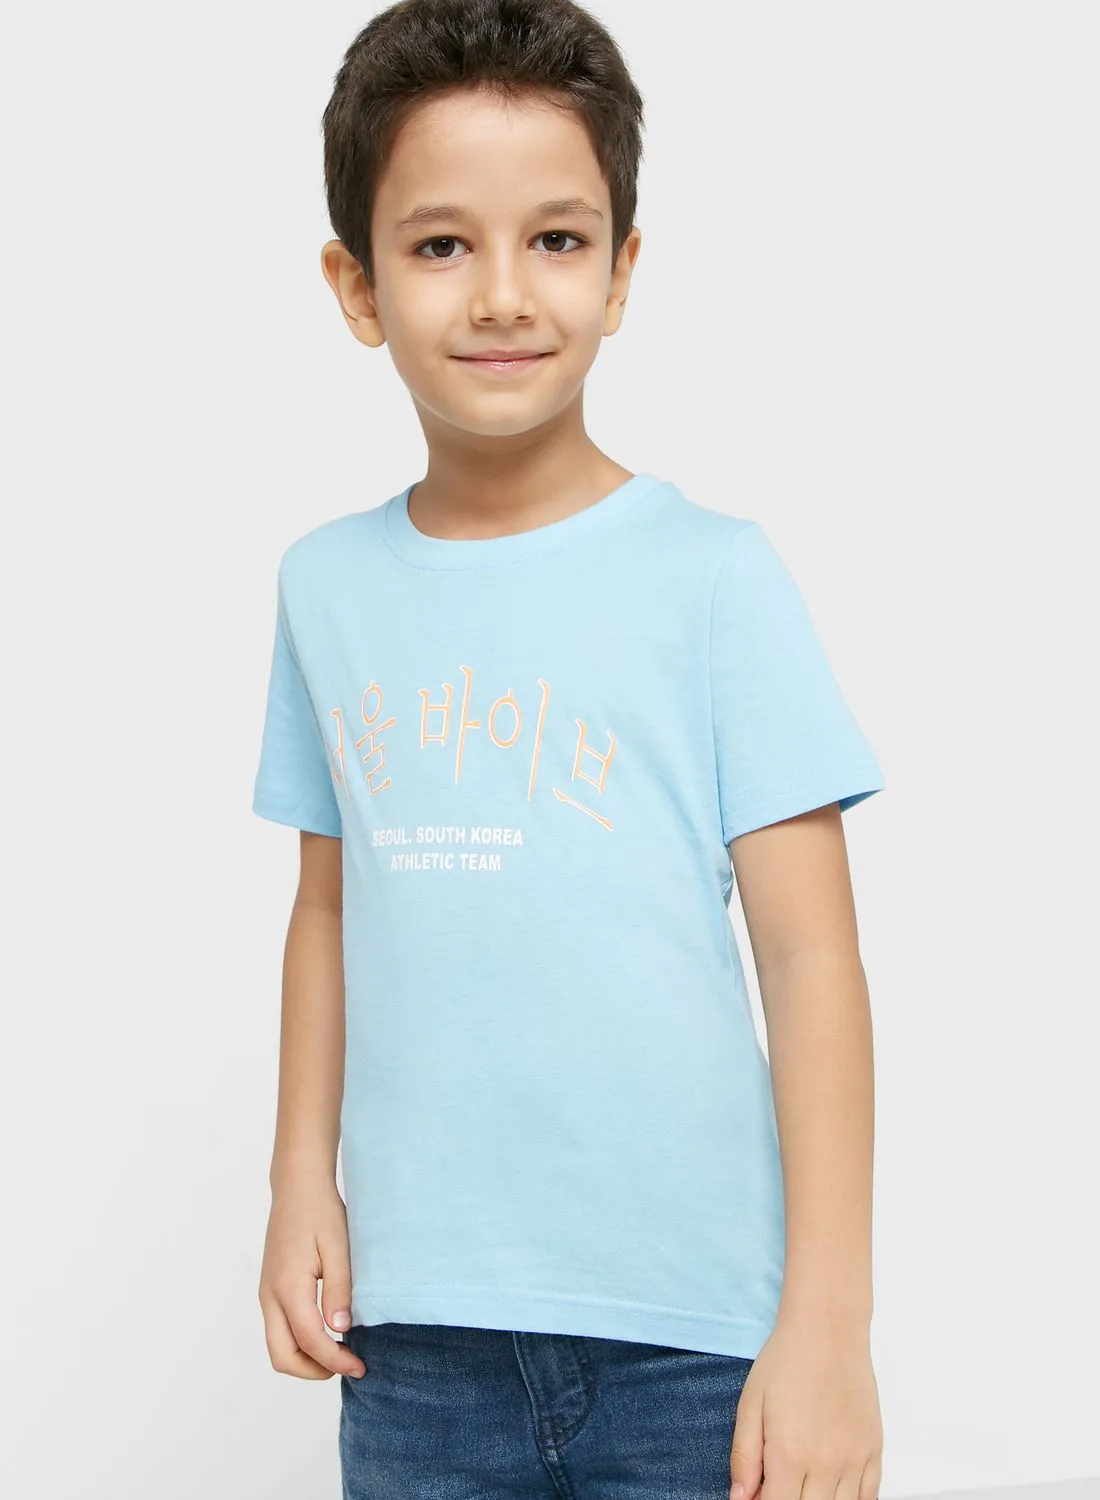 Pinata Chest Printed T-Shirt For Boys